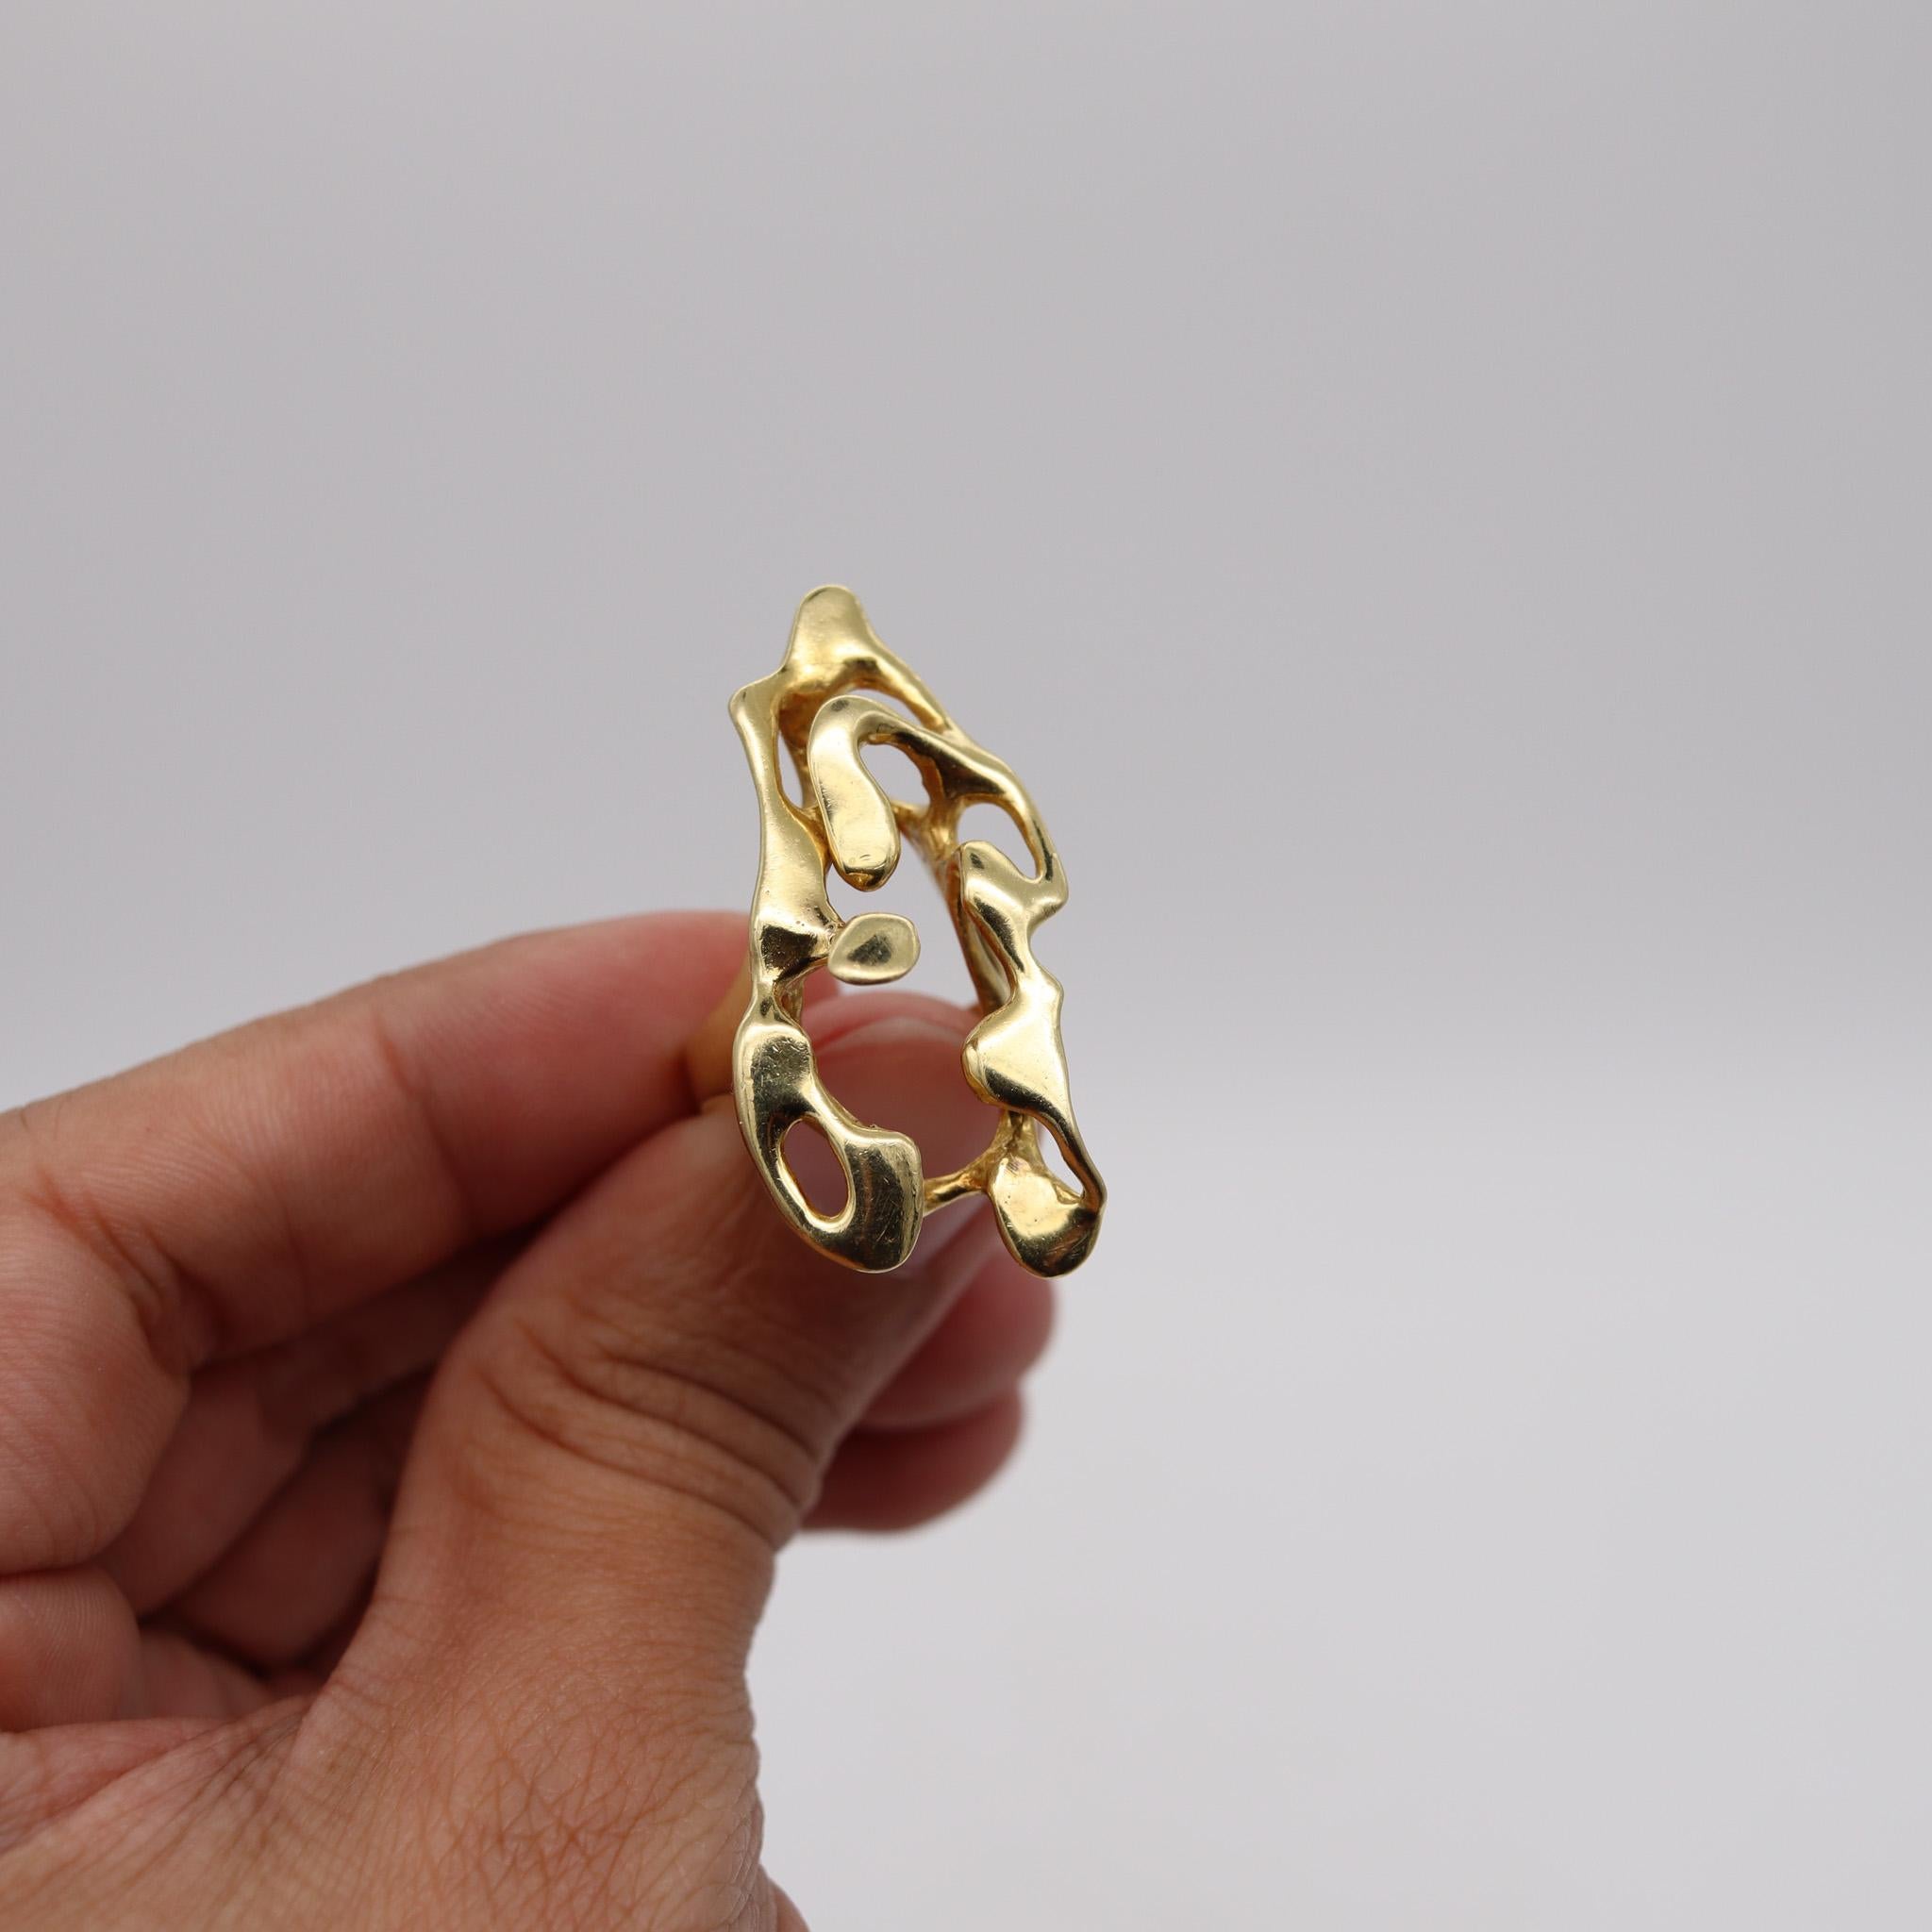 Israeli Artist Studio Organic Freeform Sculptural Ring in 18 Karat Yellow Gold In Excellent Condition For Sale In Miami, FL